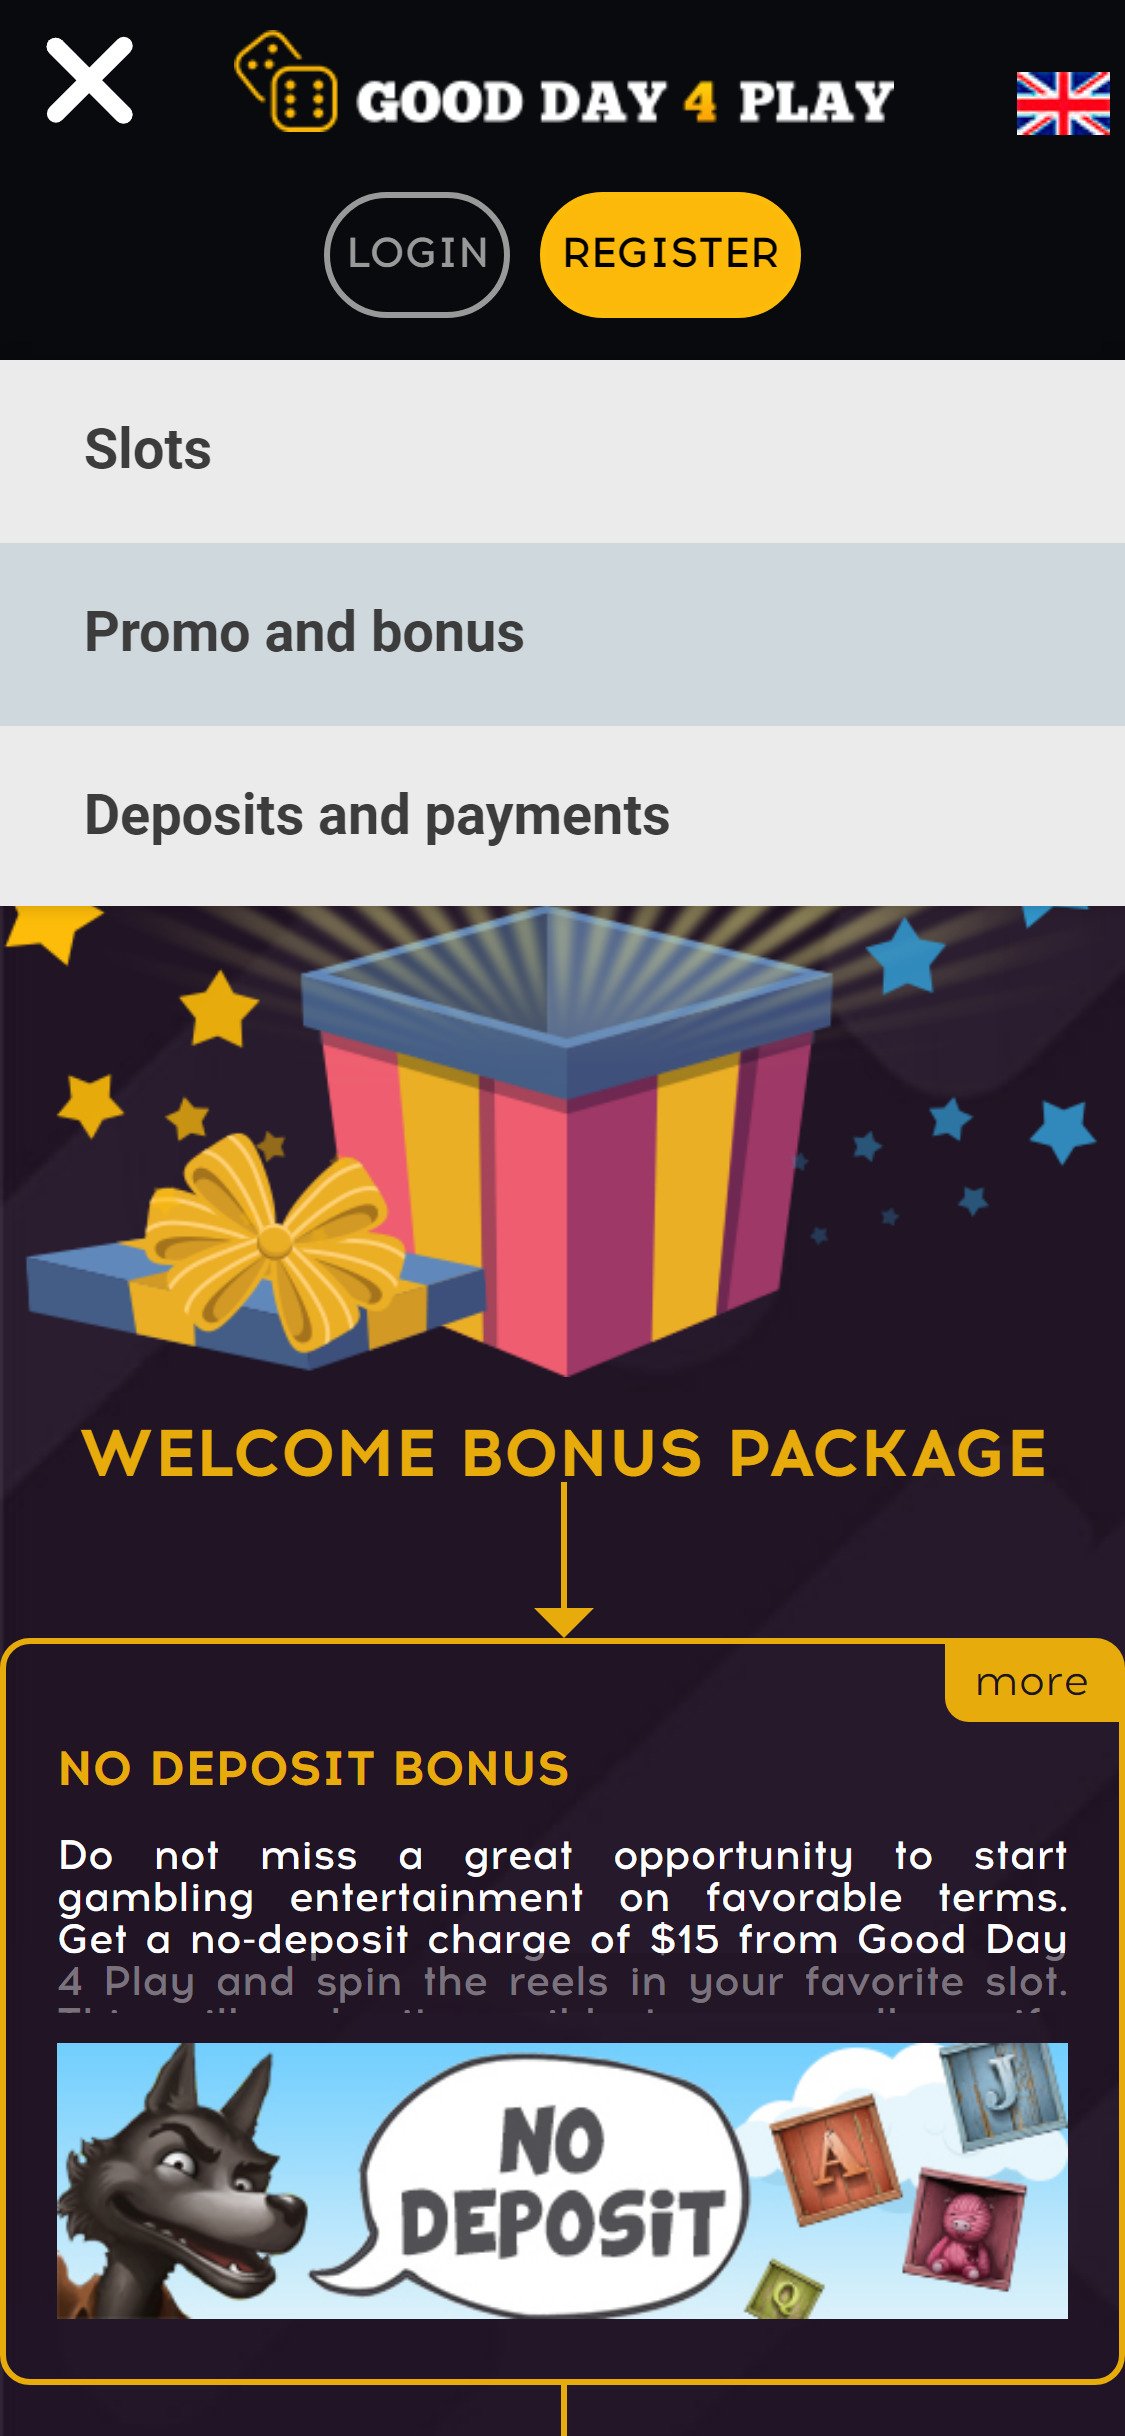 Good Day 4 Play Casino Mobile No Deposit Bonus Review